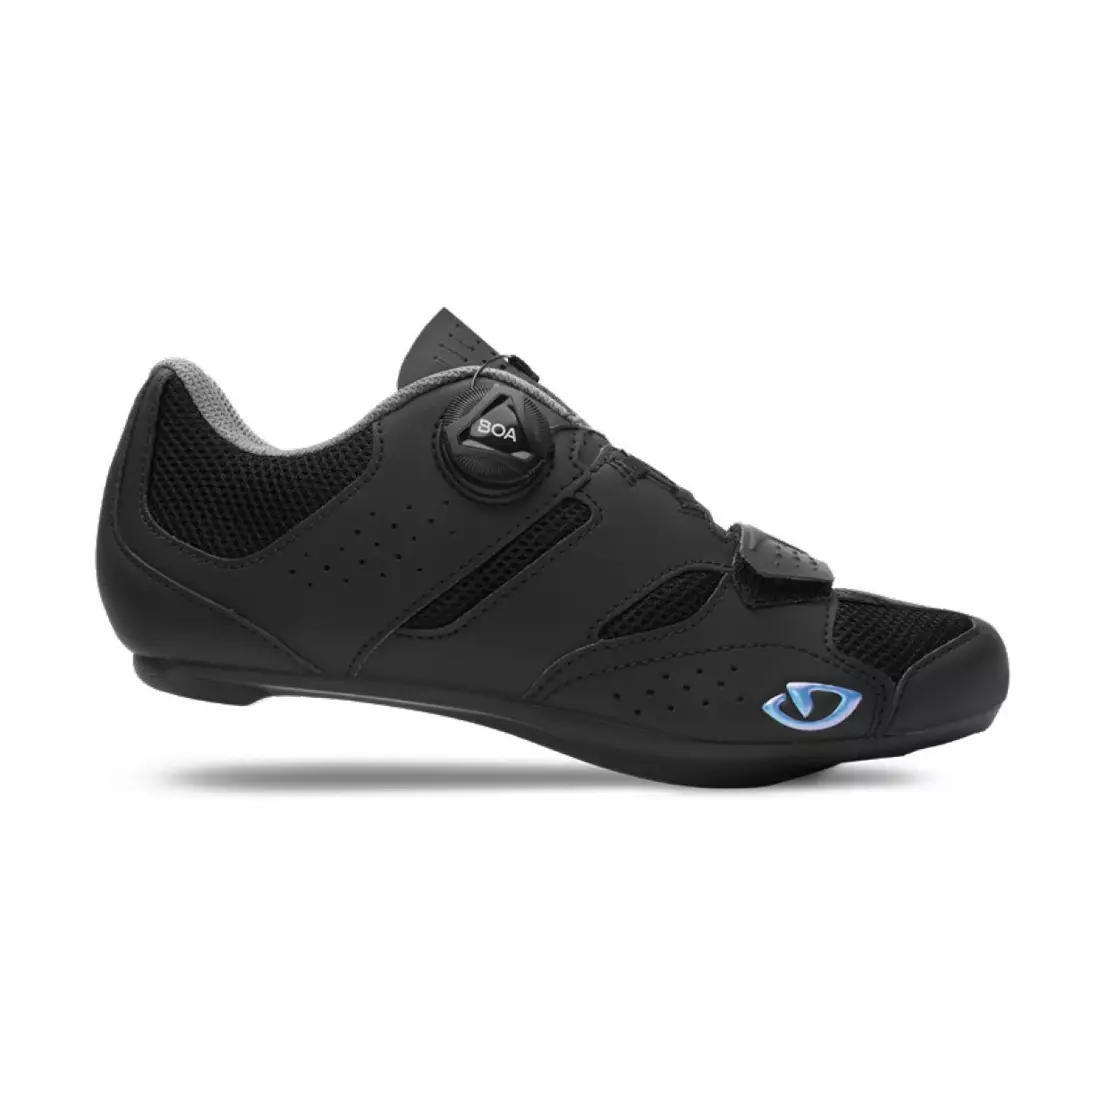 GIRO ladies' bicycle shoes savix II w black GR-7126203